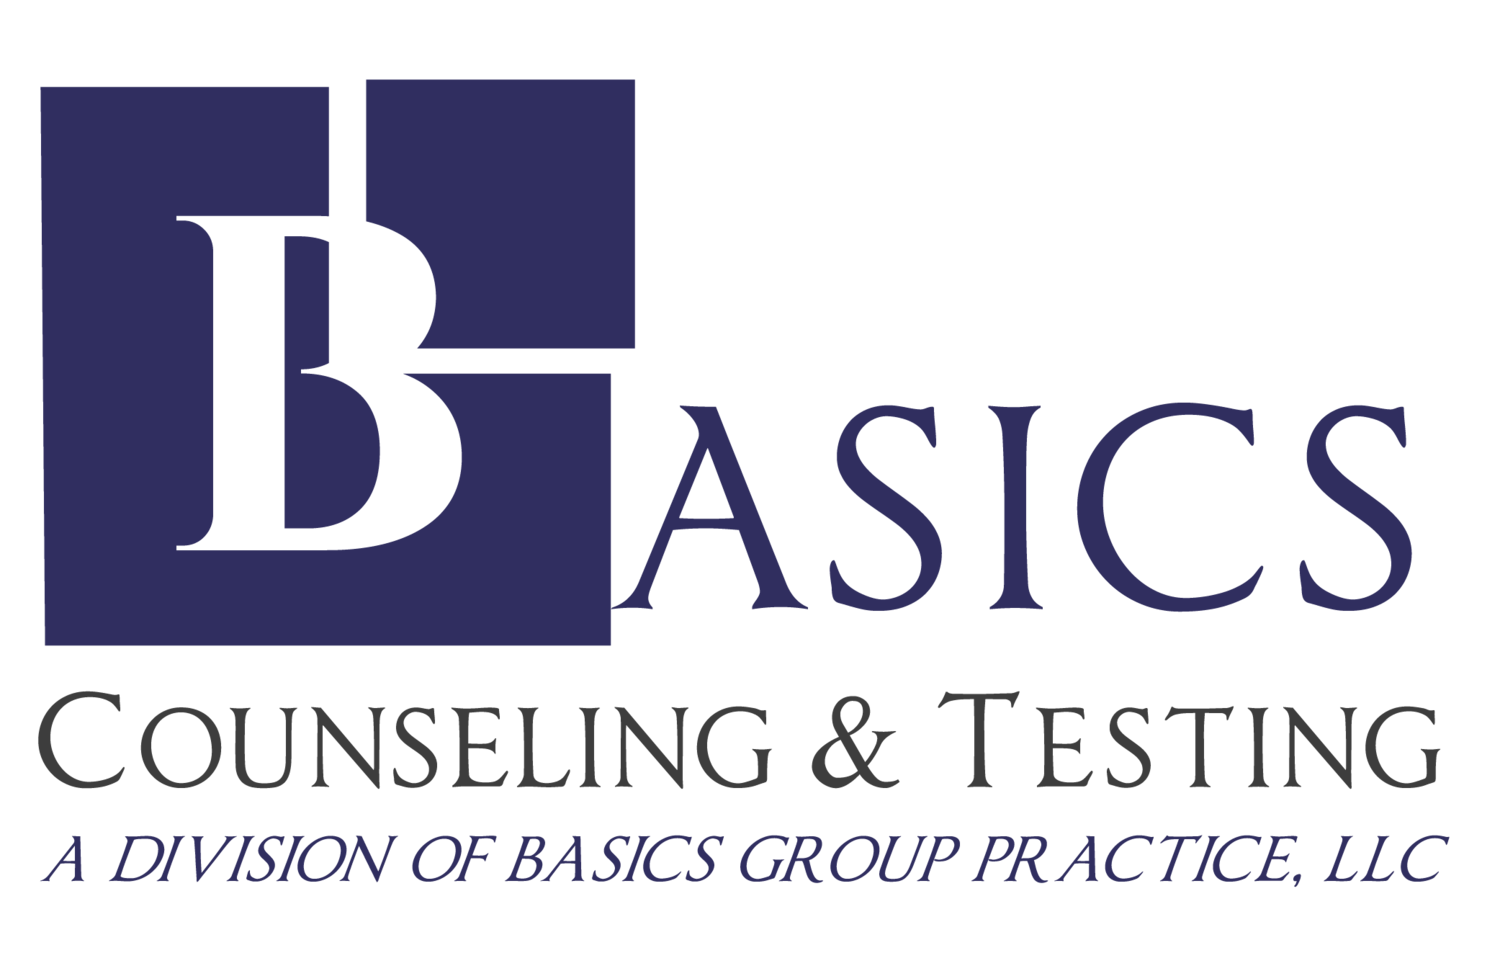 BASICS Counseling & Testing 